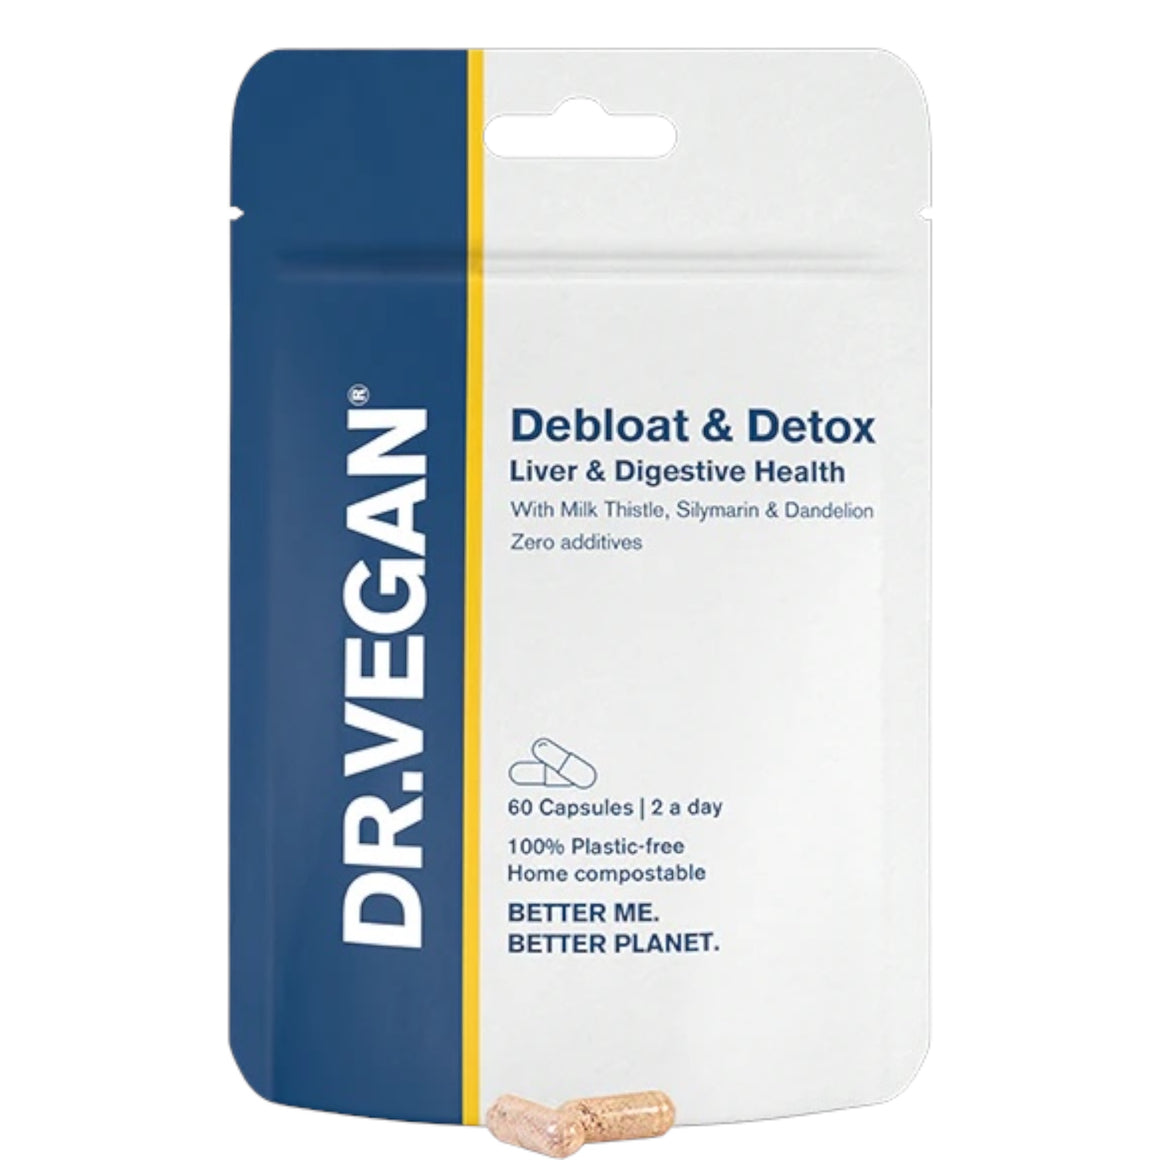 Dr Vegan Debloat & Detox Digestion & Liver Health - 60 capsules